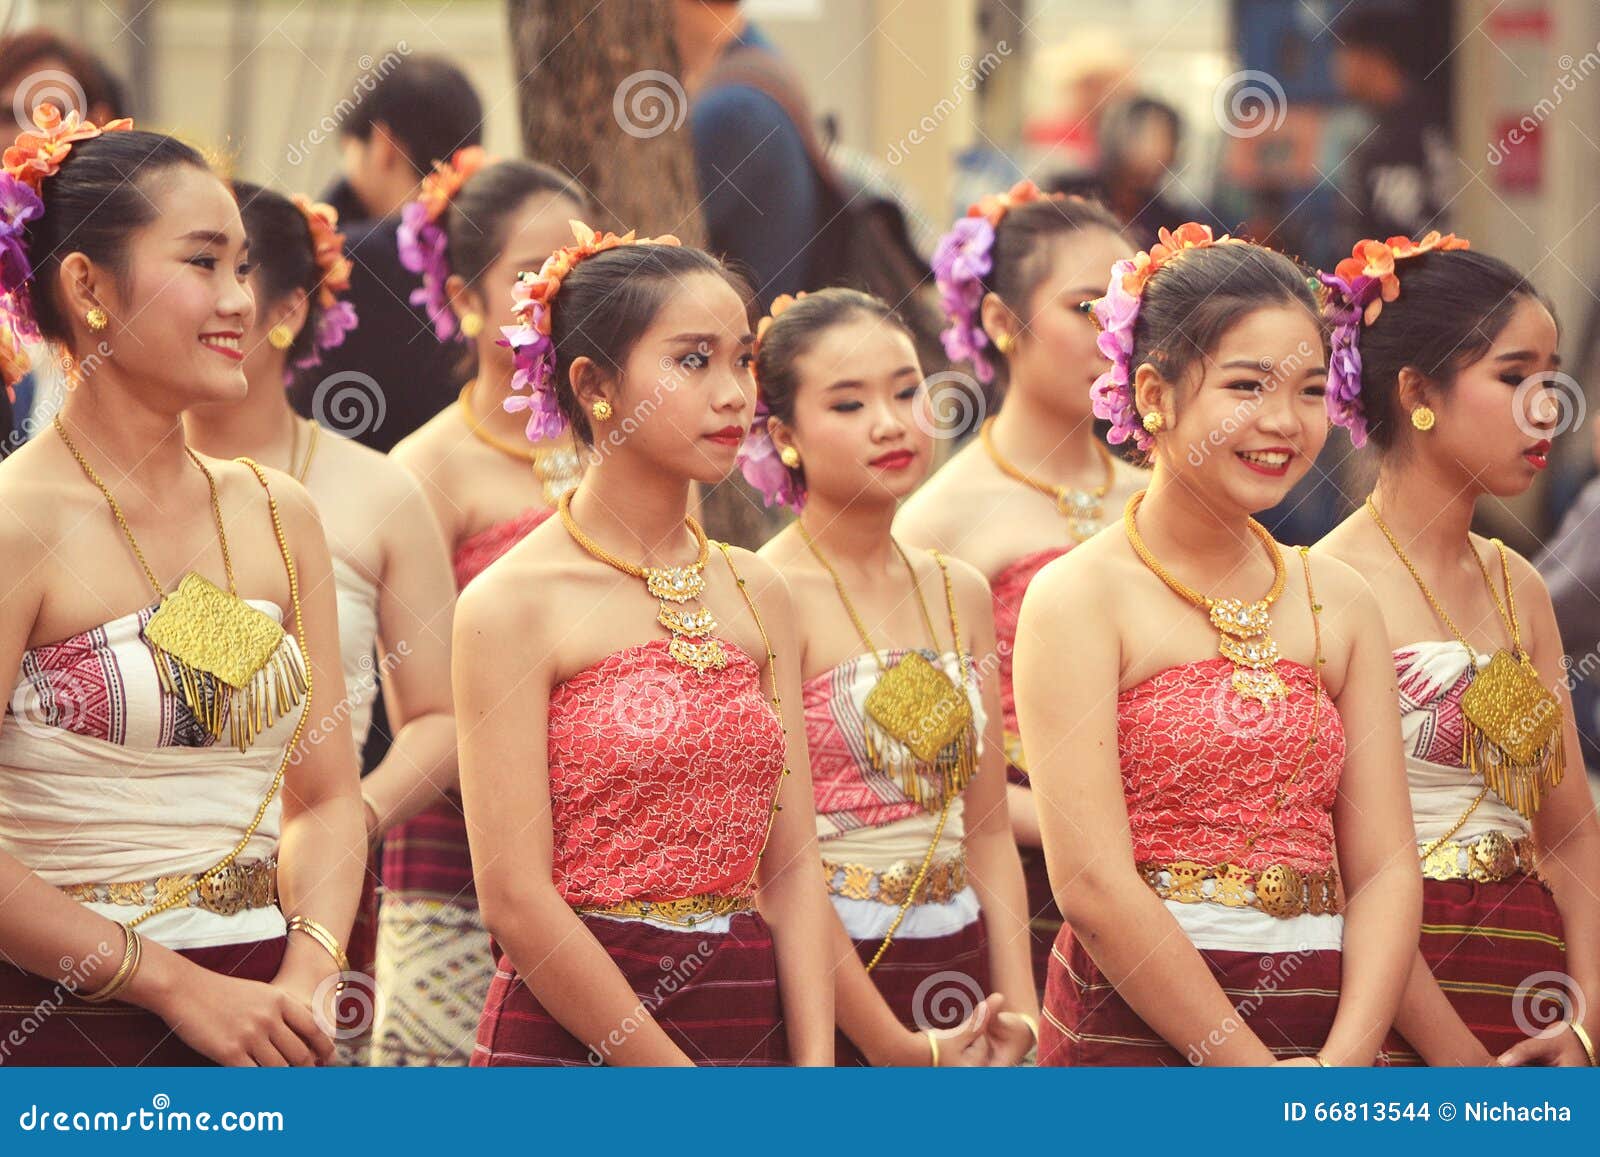 https://thumbs.dreamstime.com/z/beautiful-women-row-native-clothing-parade-flowers-festival-chiang-mai-thailand-66813544.jpg